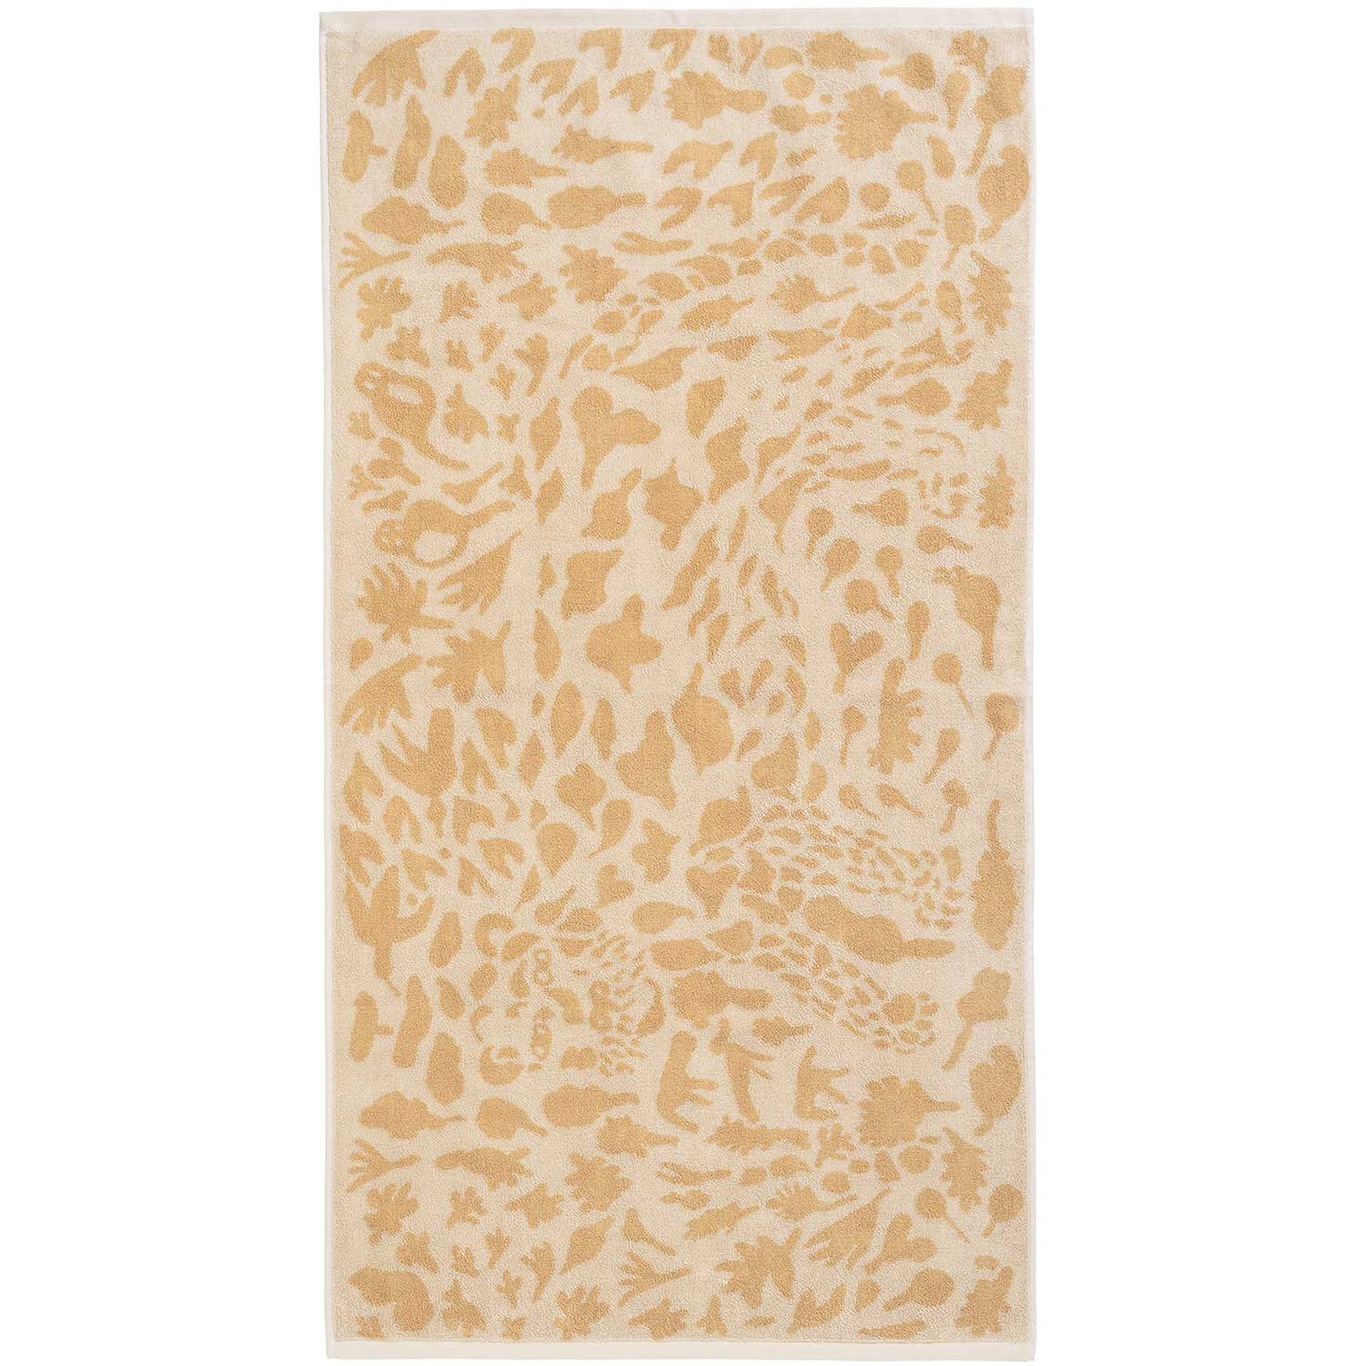 Oiva Toikka Collection Towel, 70x140 cm, Cheetah Brown